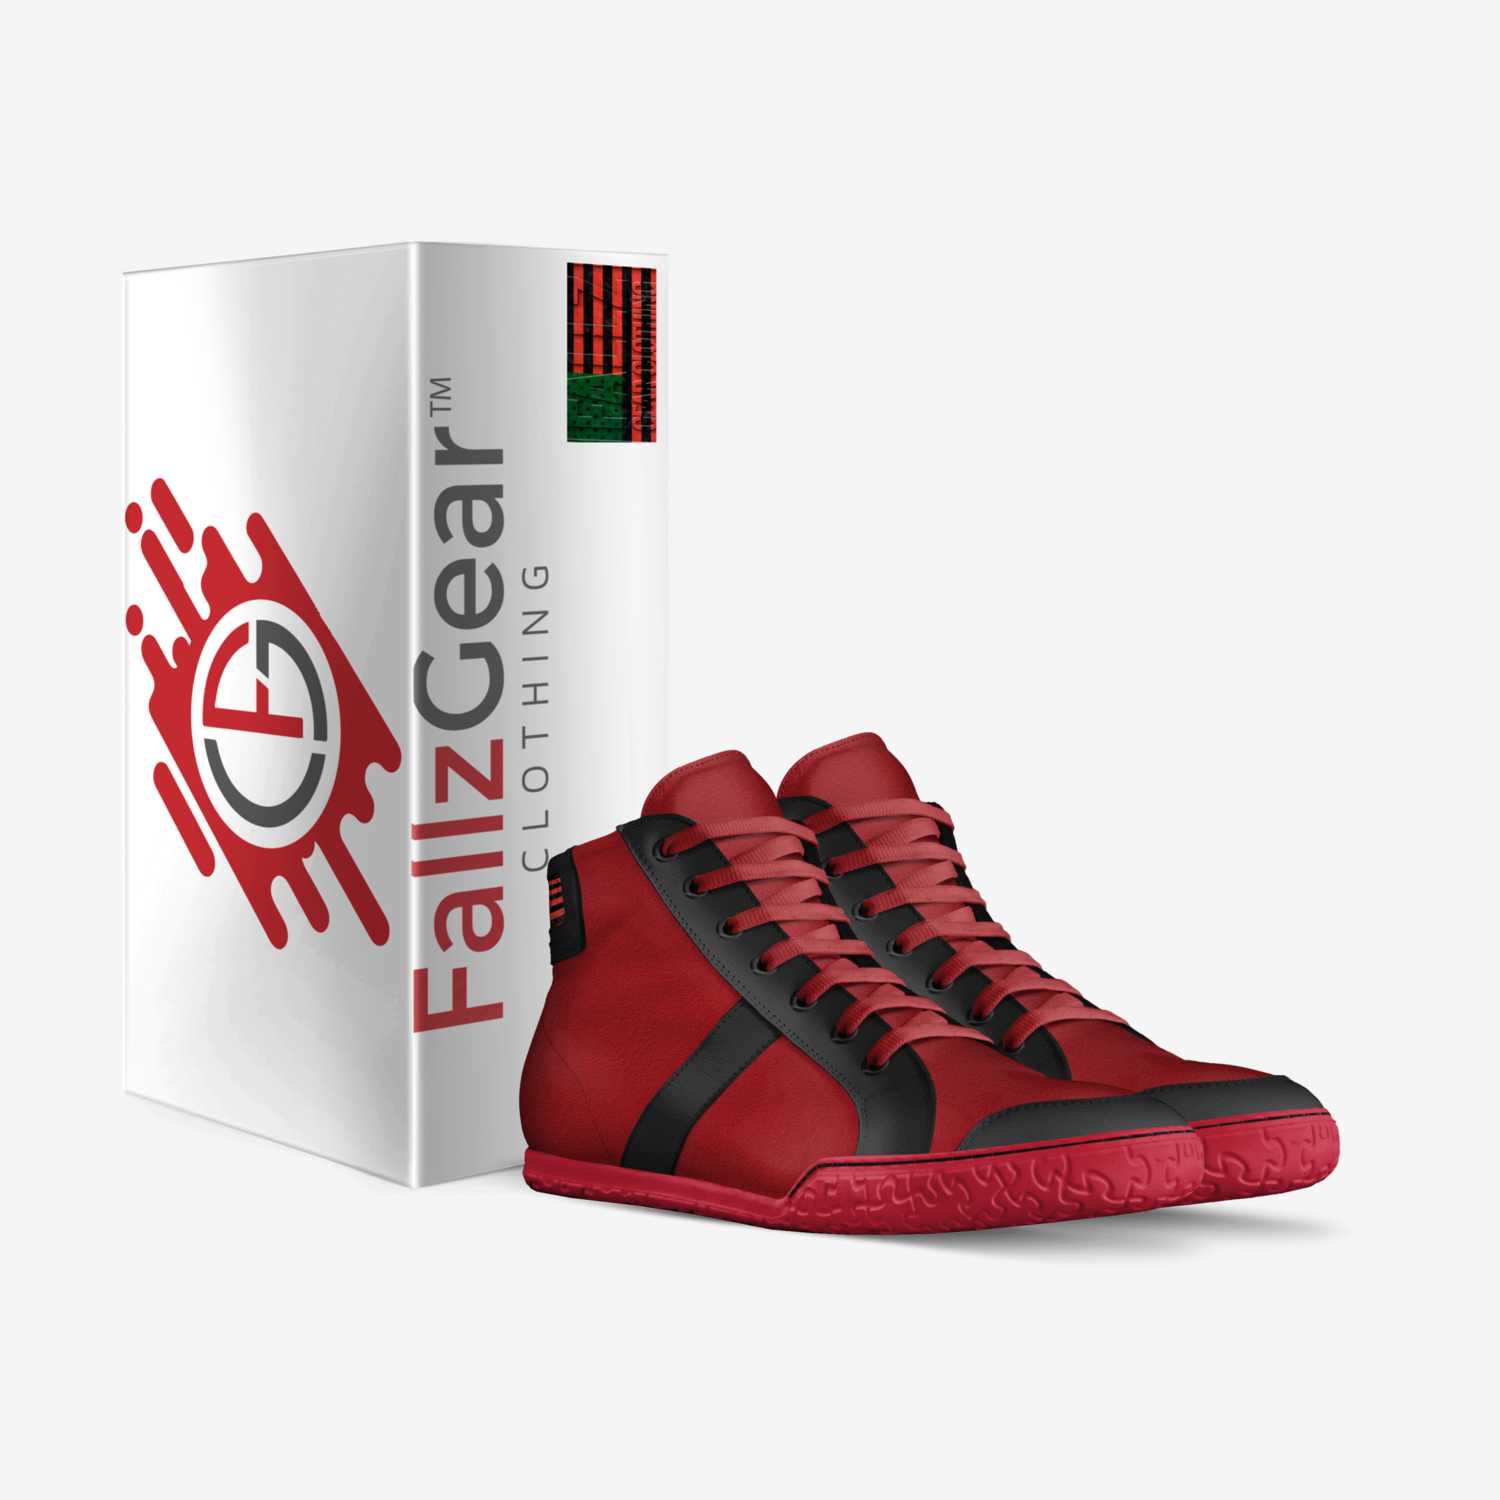 Fallz Gear- HuhMan custom made in Italy shoes by Fallz Gear | Box view